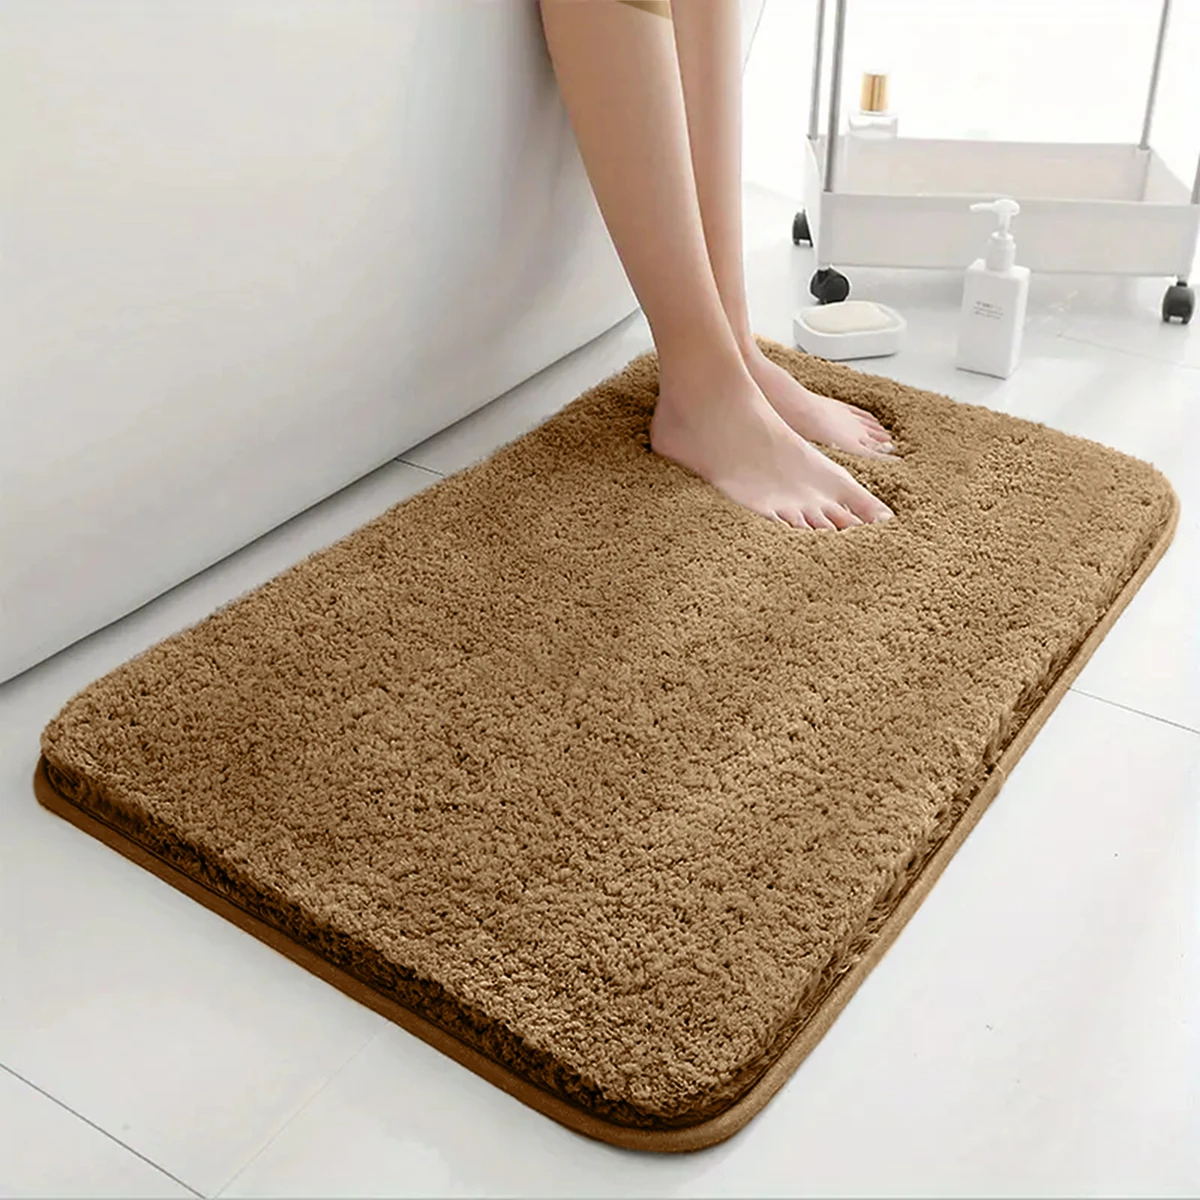 Super wasser absorbierende Badezimmer Boden matte Anti-Rutsch-Bad matte Bade matte lange Haare Boden matte Schlafzimmer Tür matte Wohnkultur